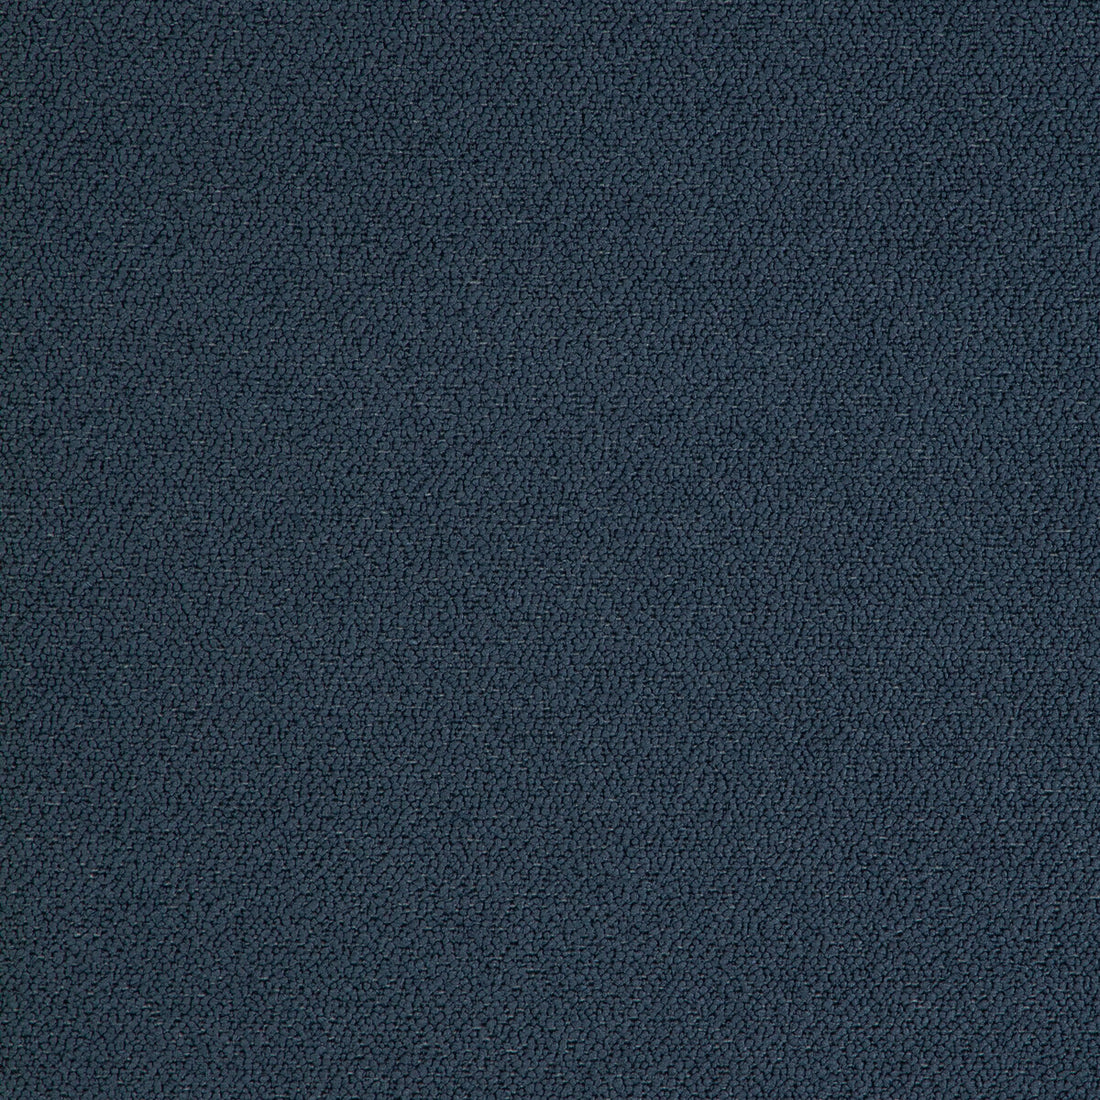 Kravet Smart fabric in 36980-50 color - pattern 36980.50.0 - by Kravet Smart